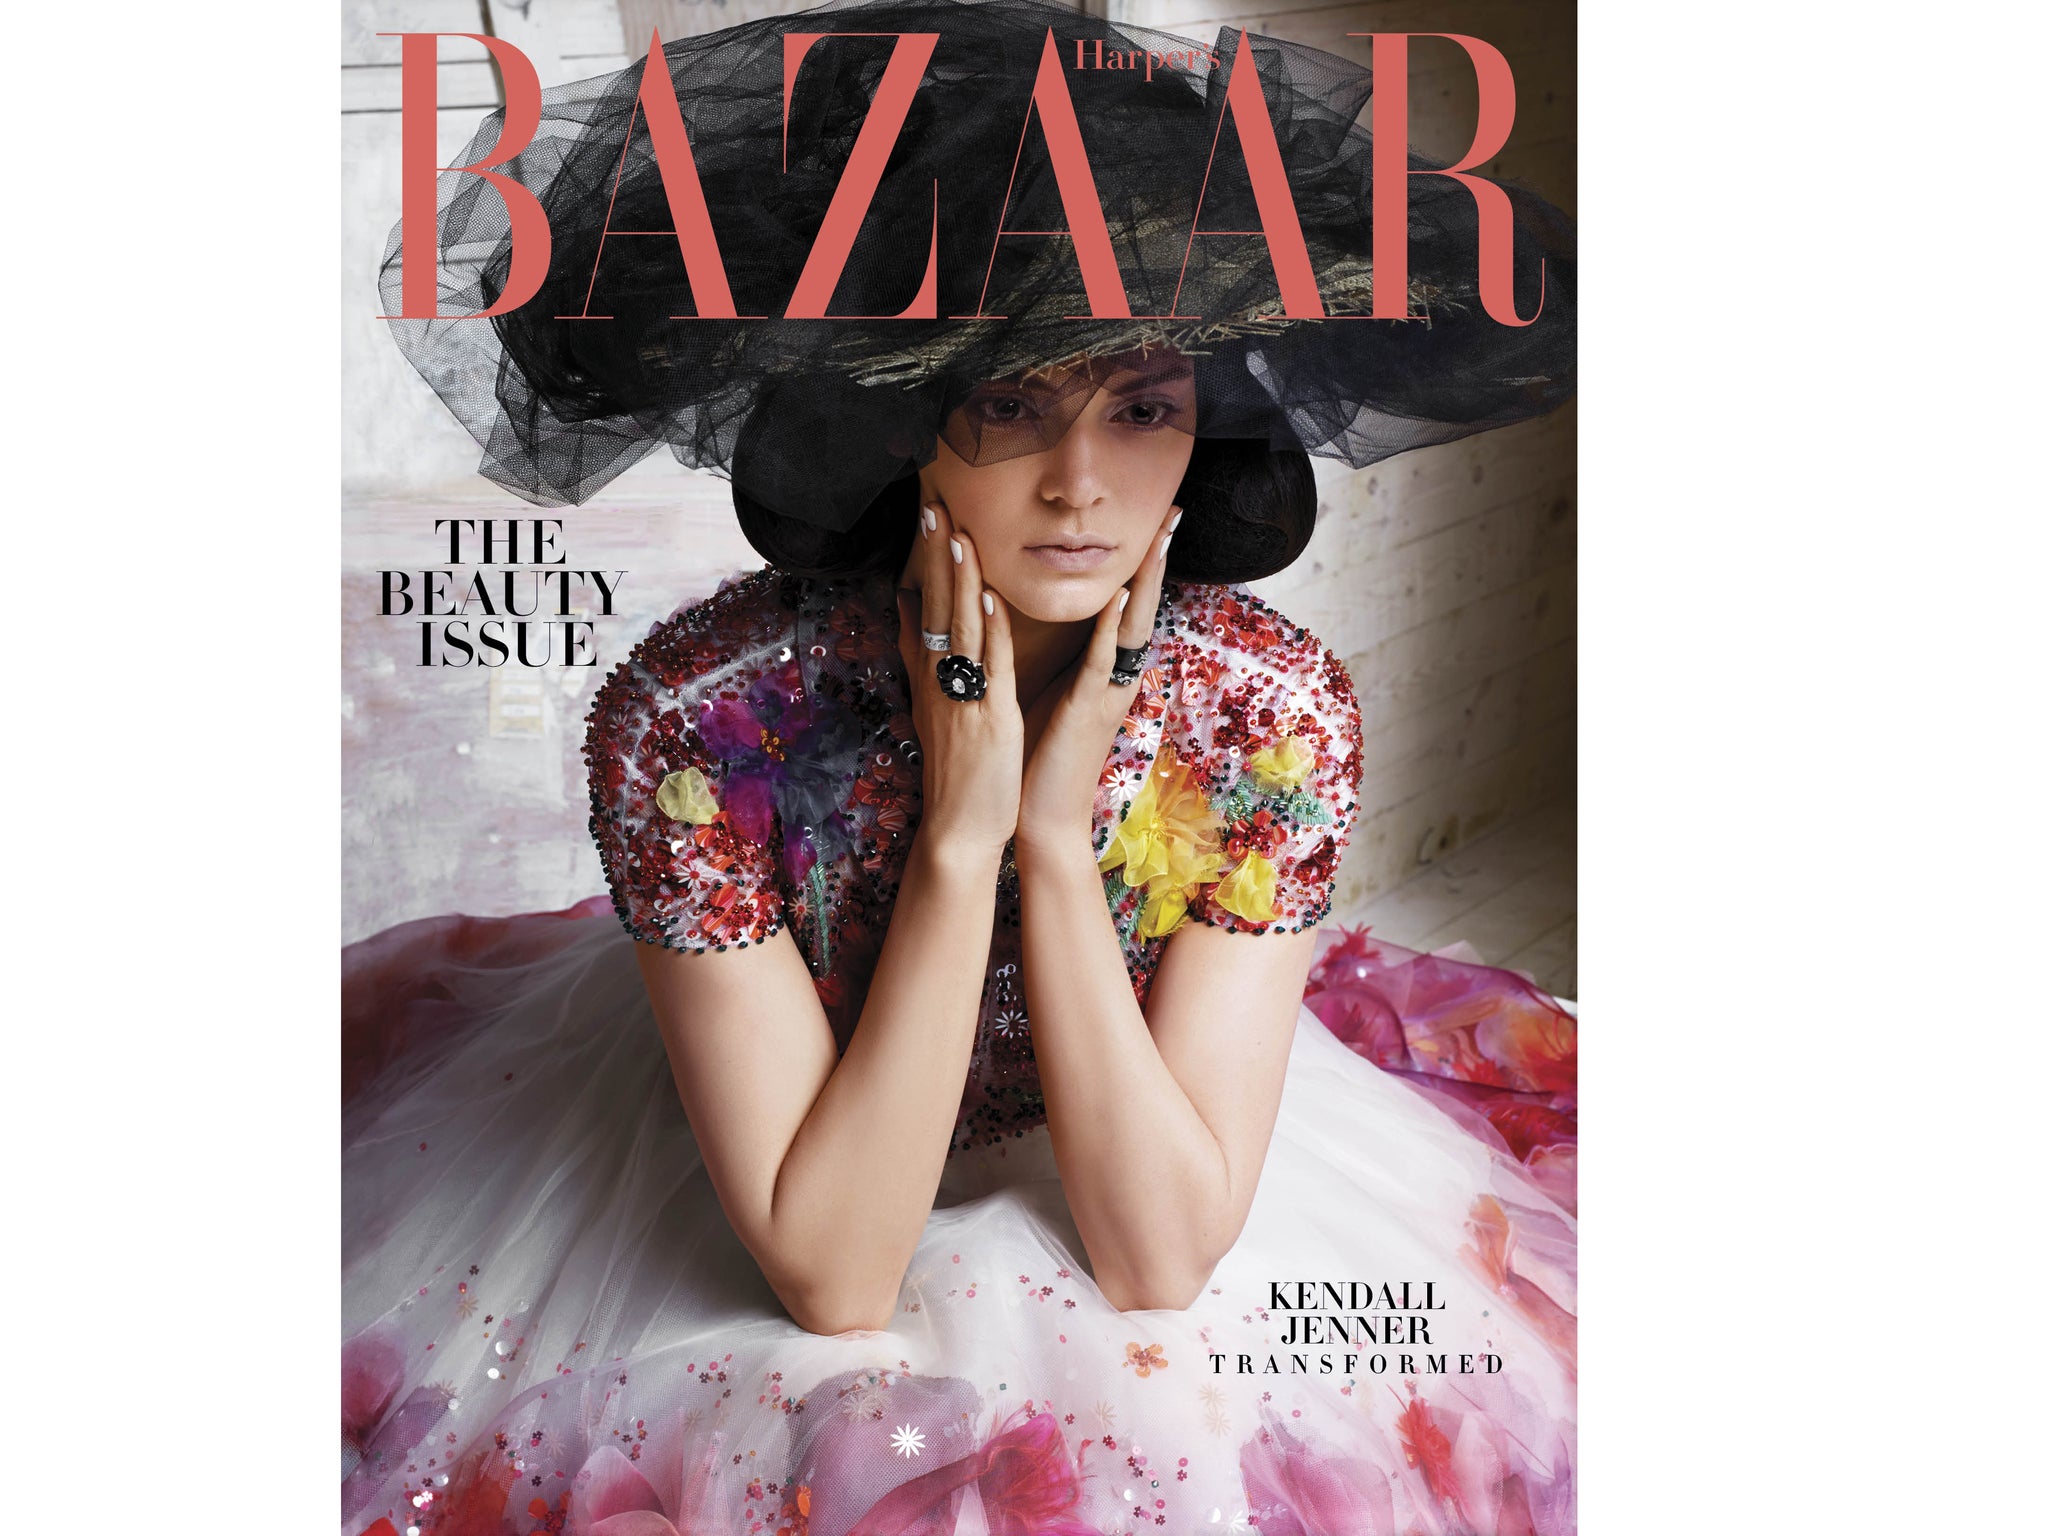 Kendall Jenner on the cover of Harper's Bazaar